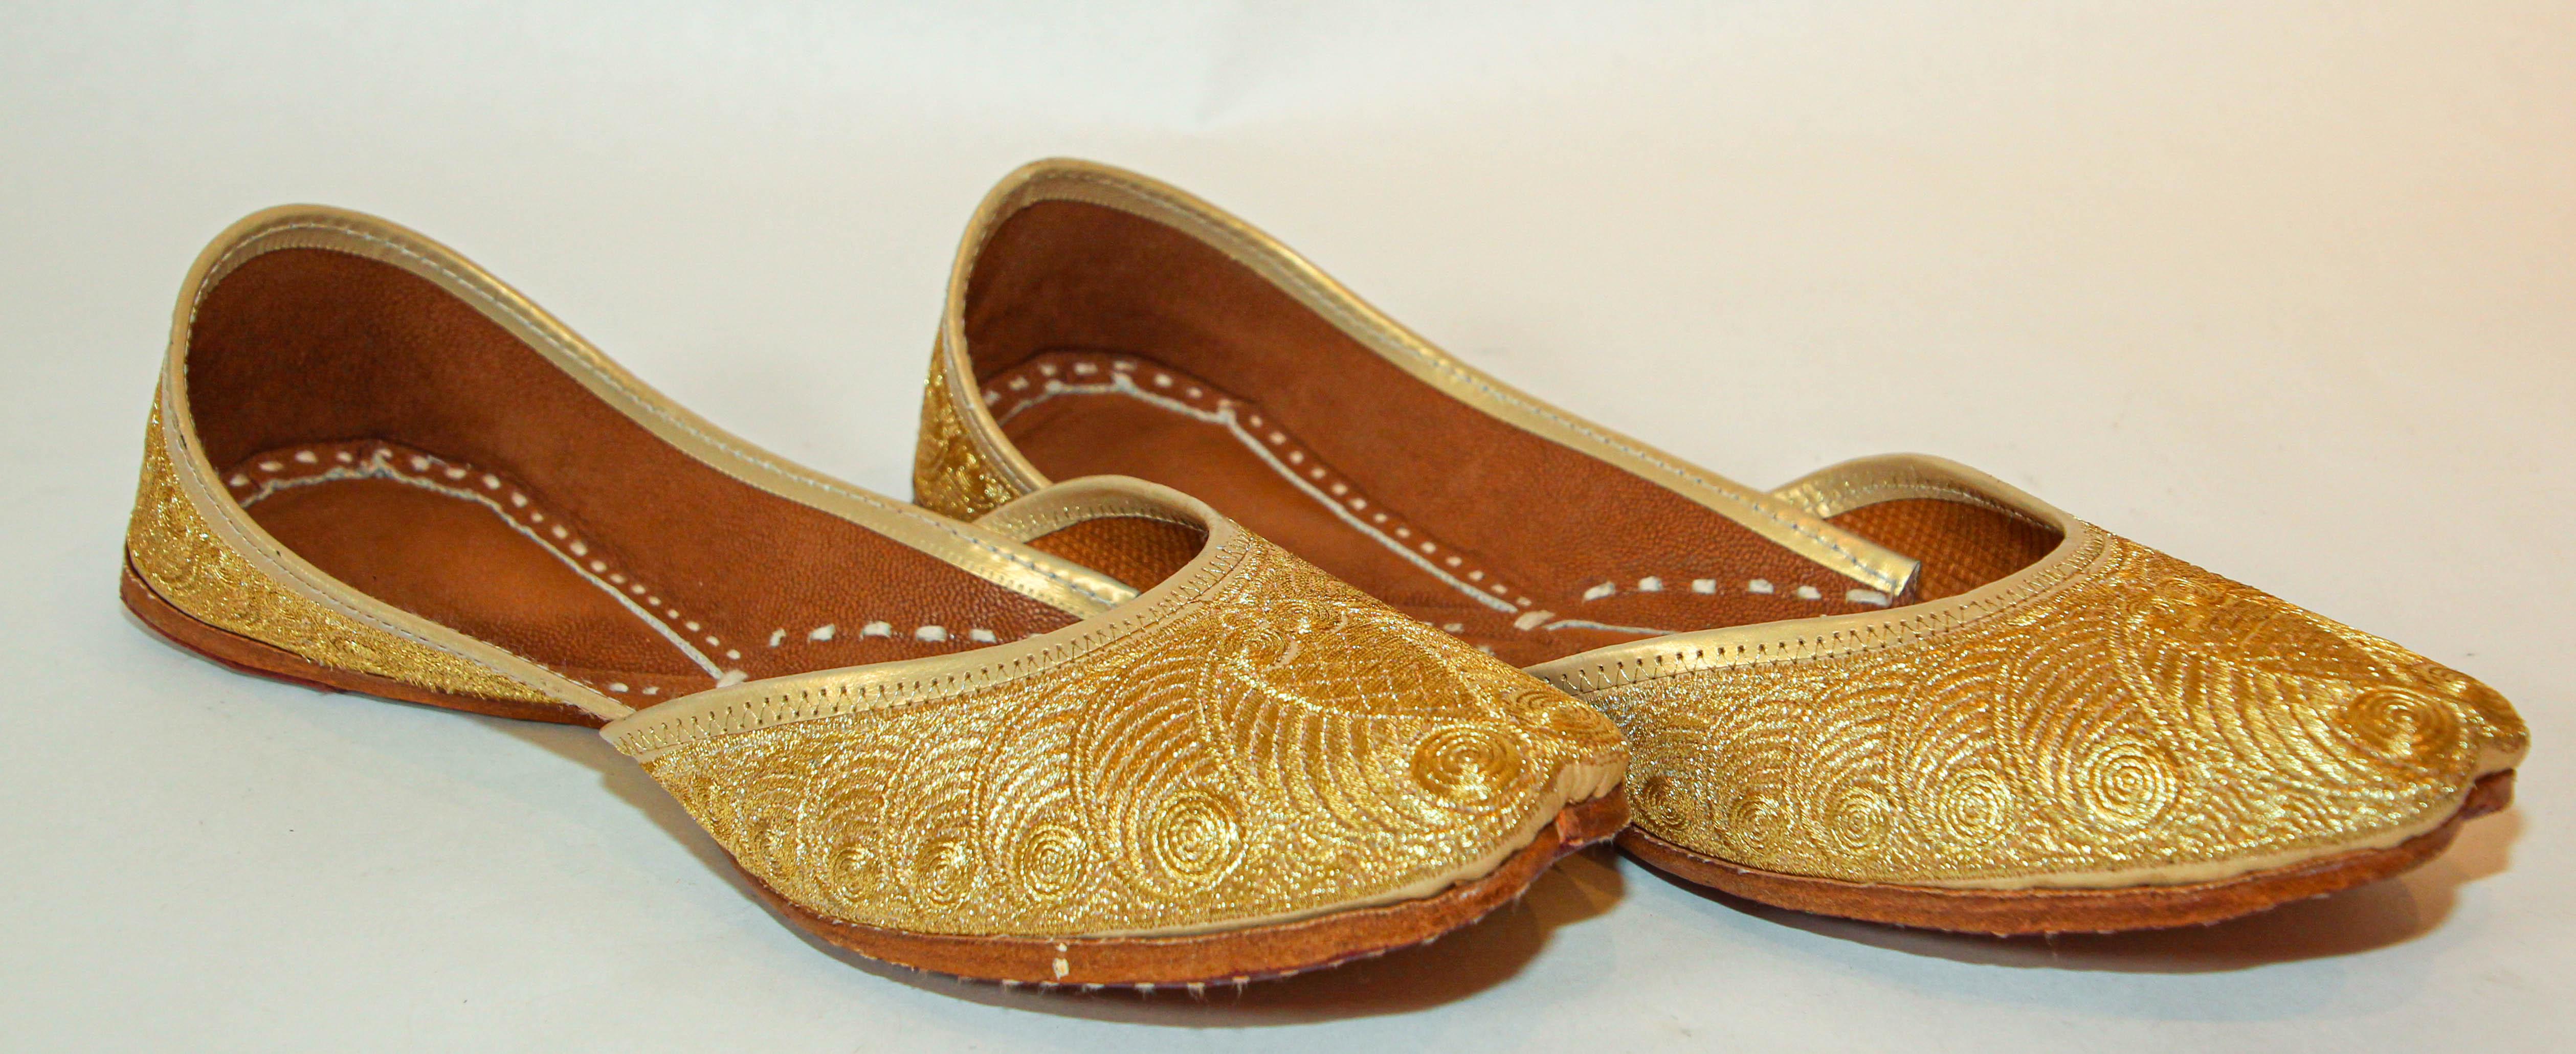 punjabi slippers